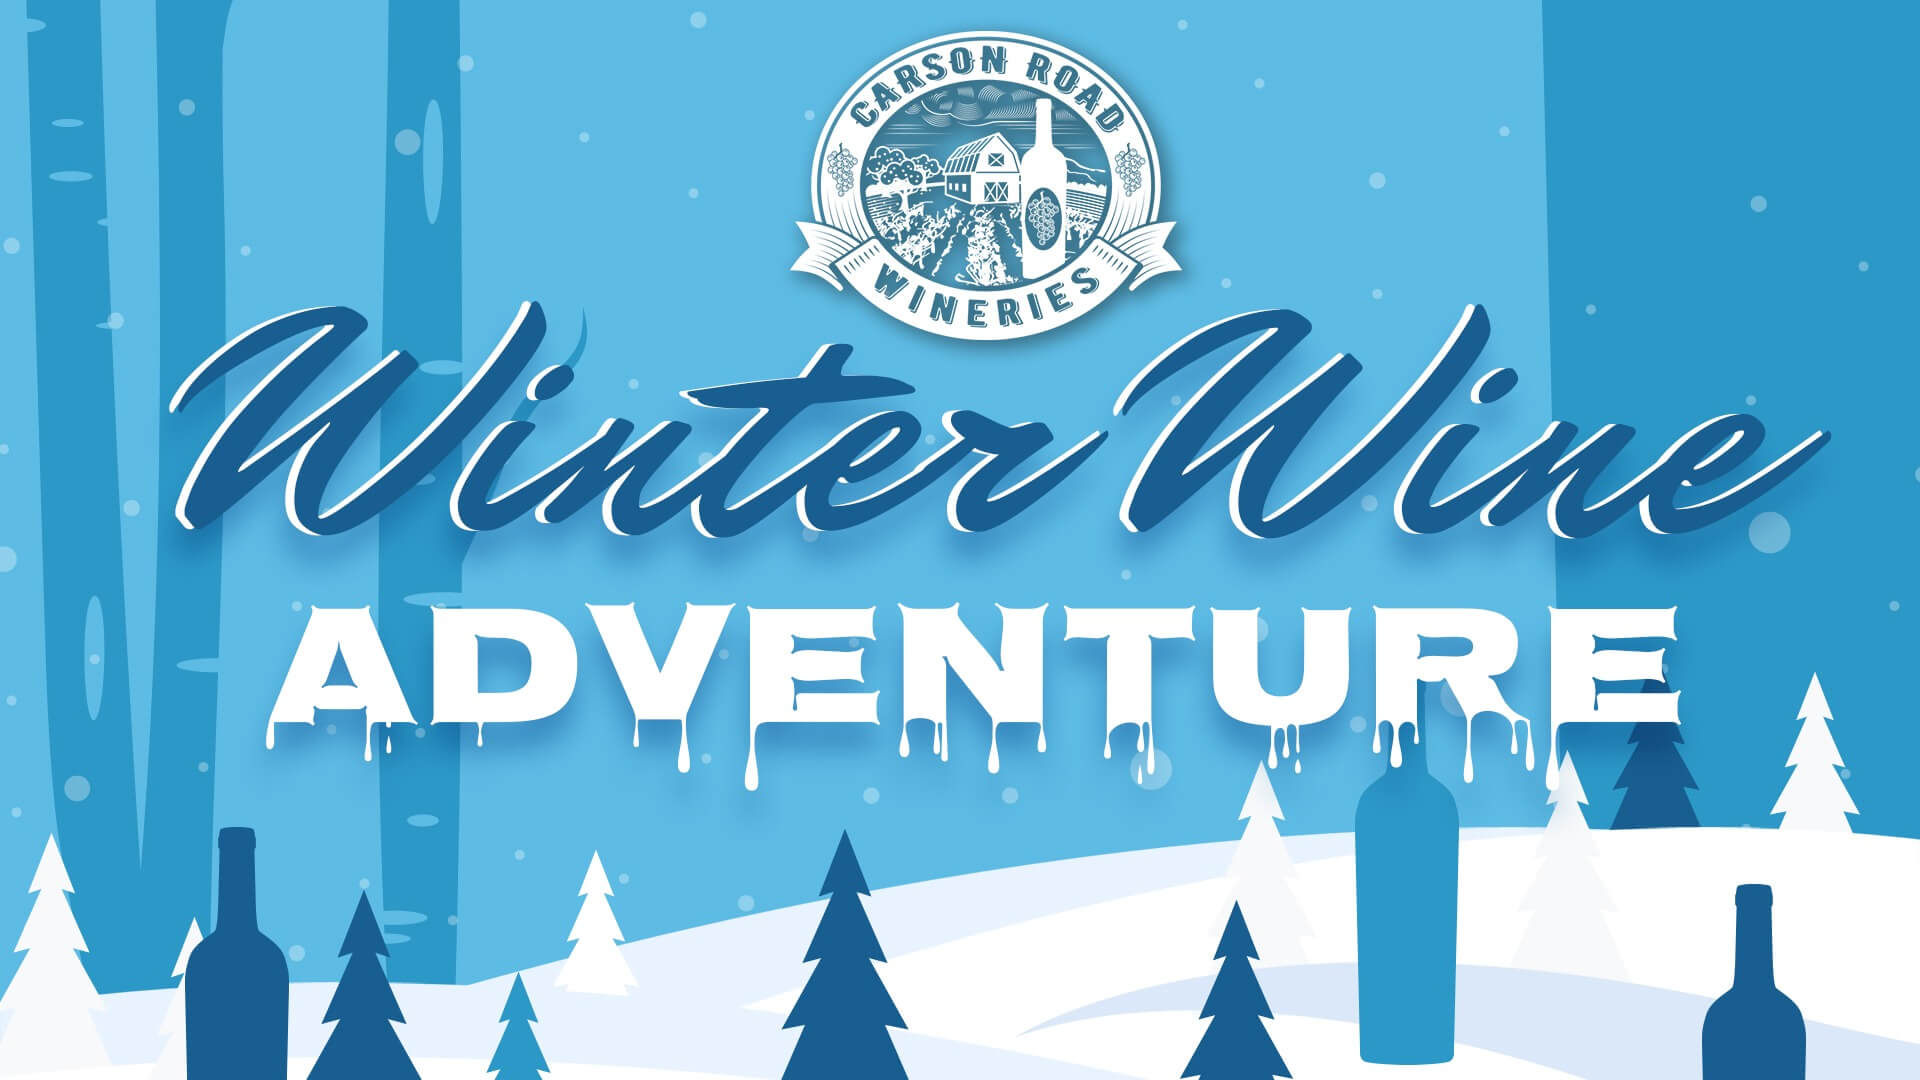 Carson Road Wineries Winter-Wine-adventure-banner